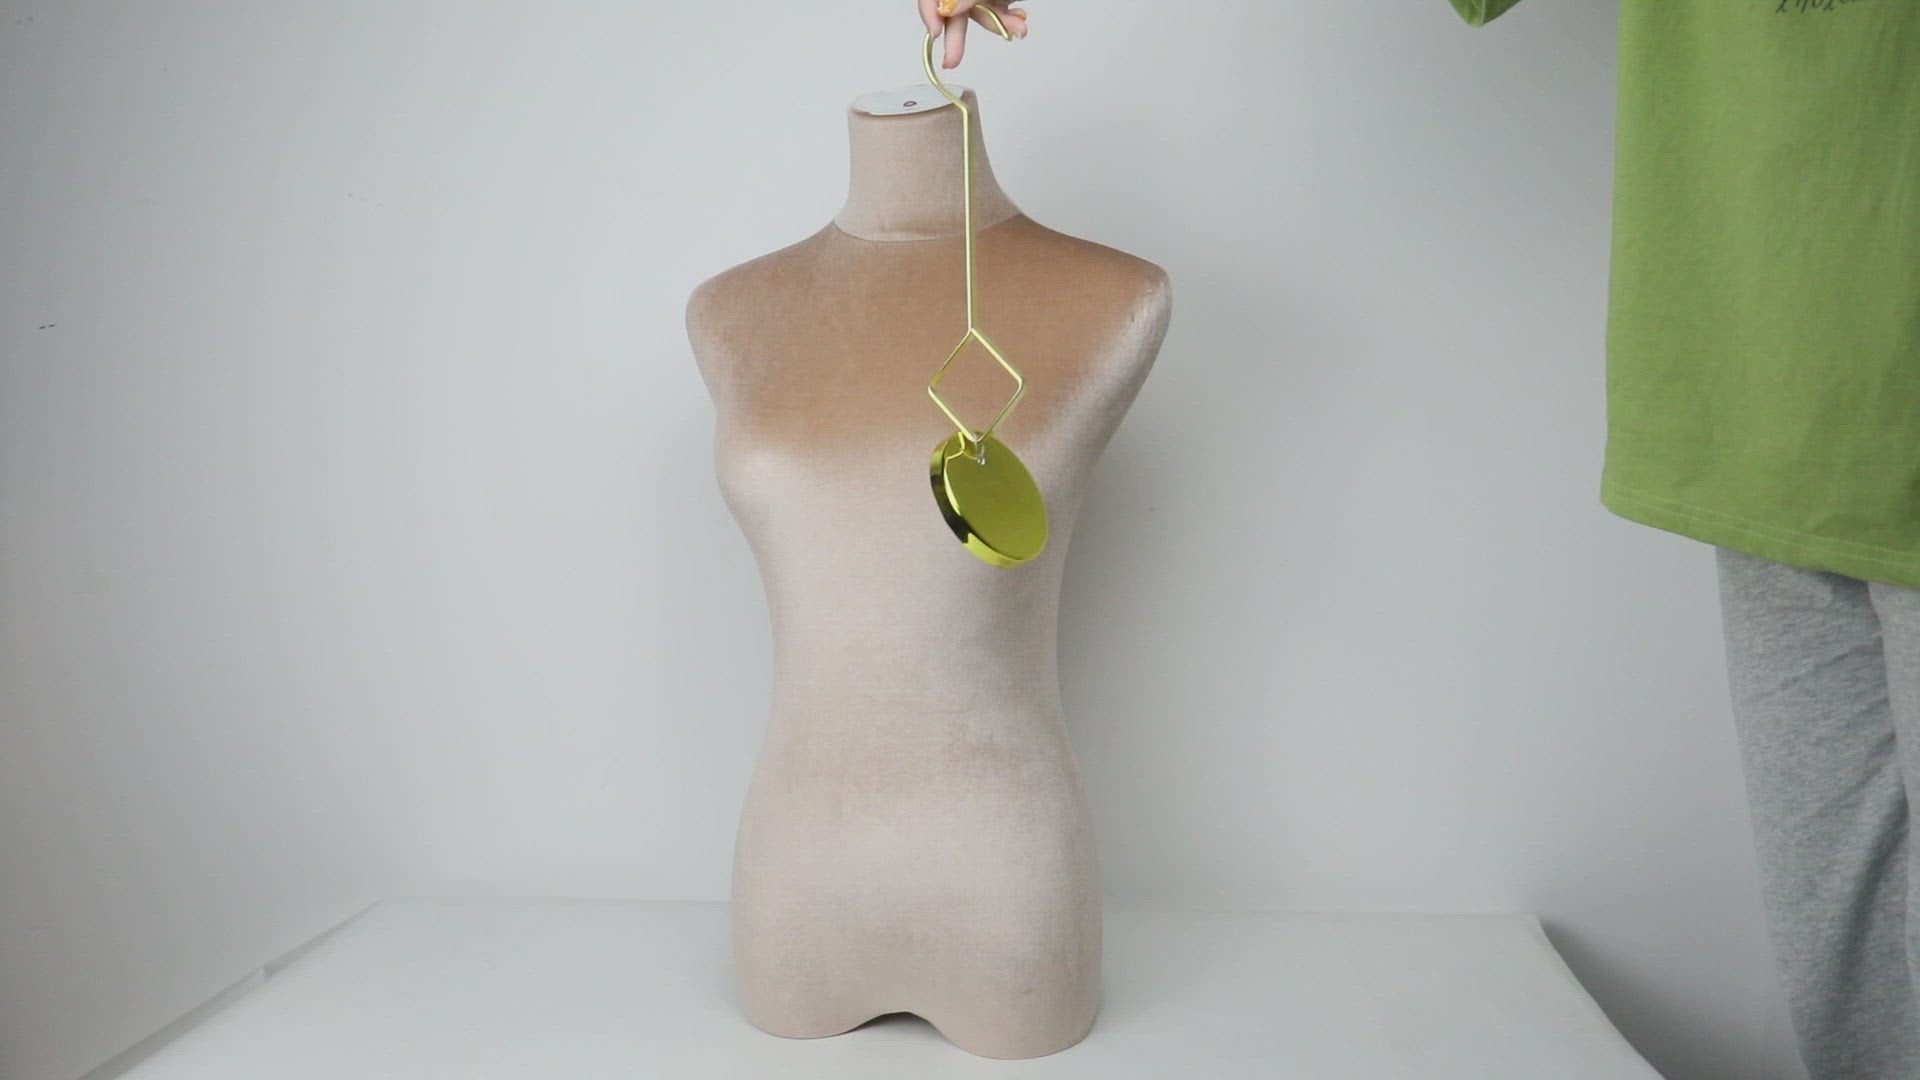 Hanging Half-leg Female Cloth Mannequin Torso: Size 8